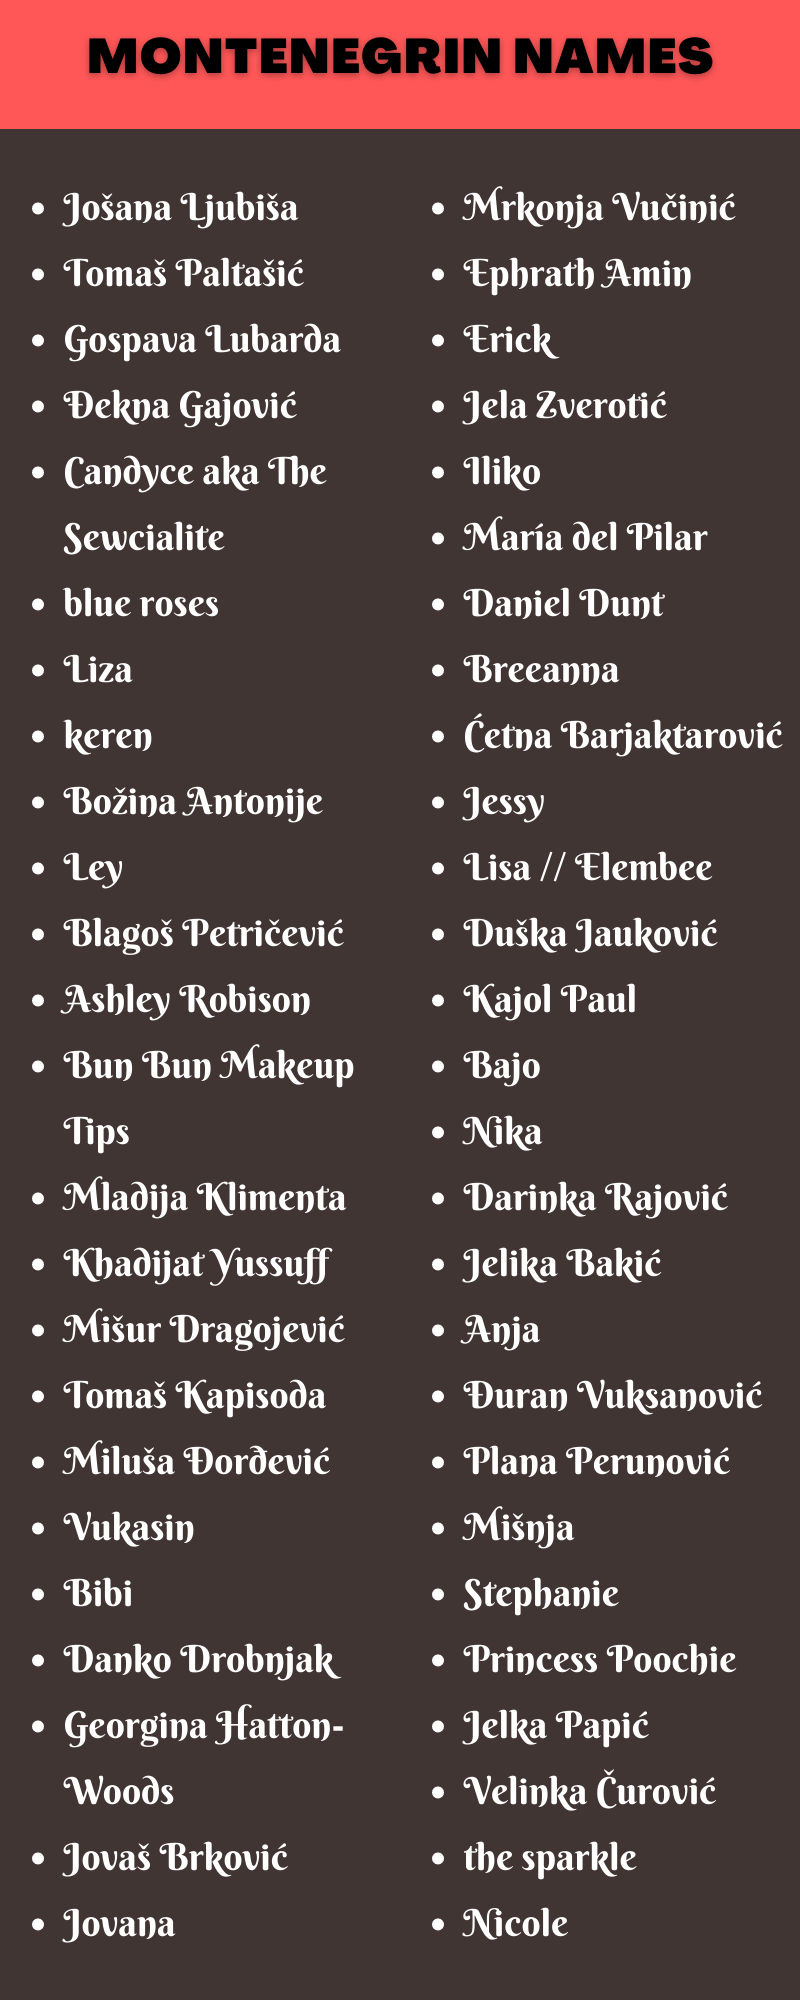 Montenegrin Names